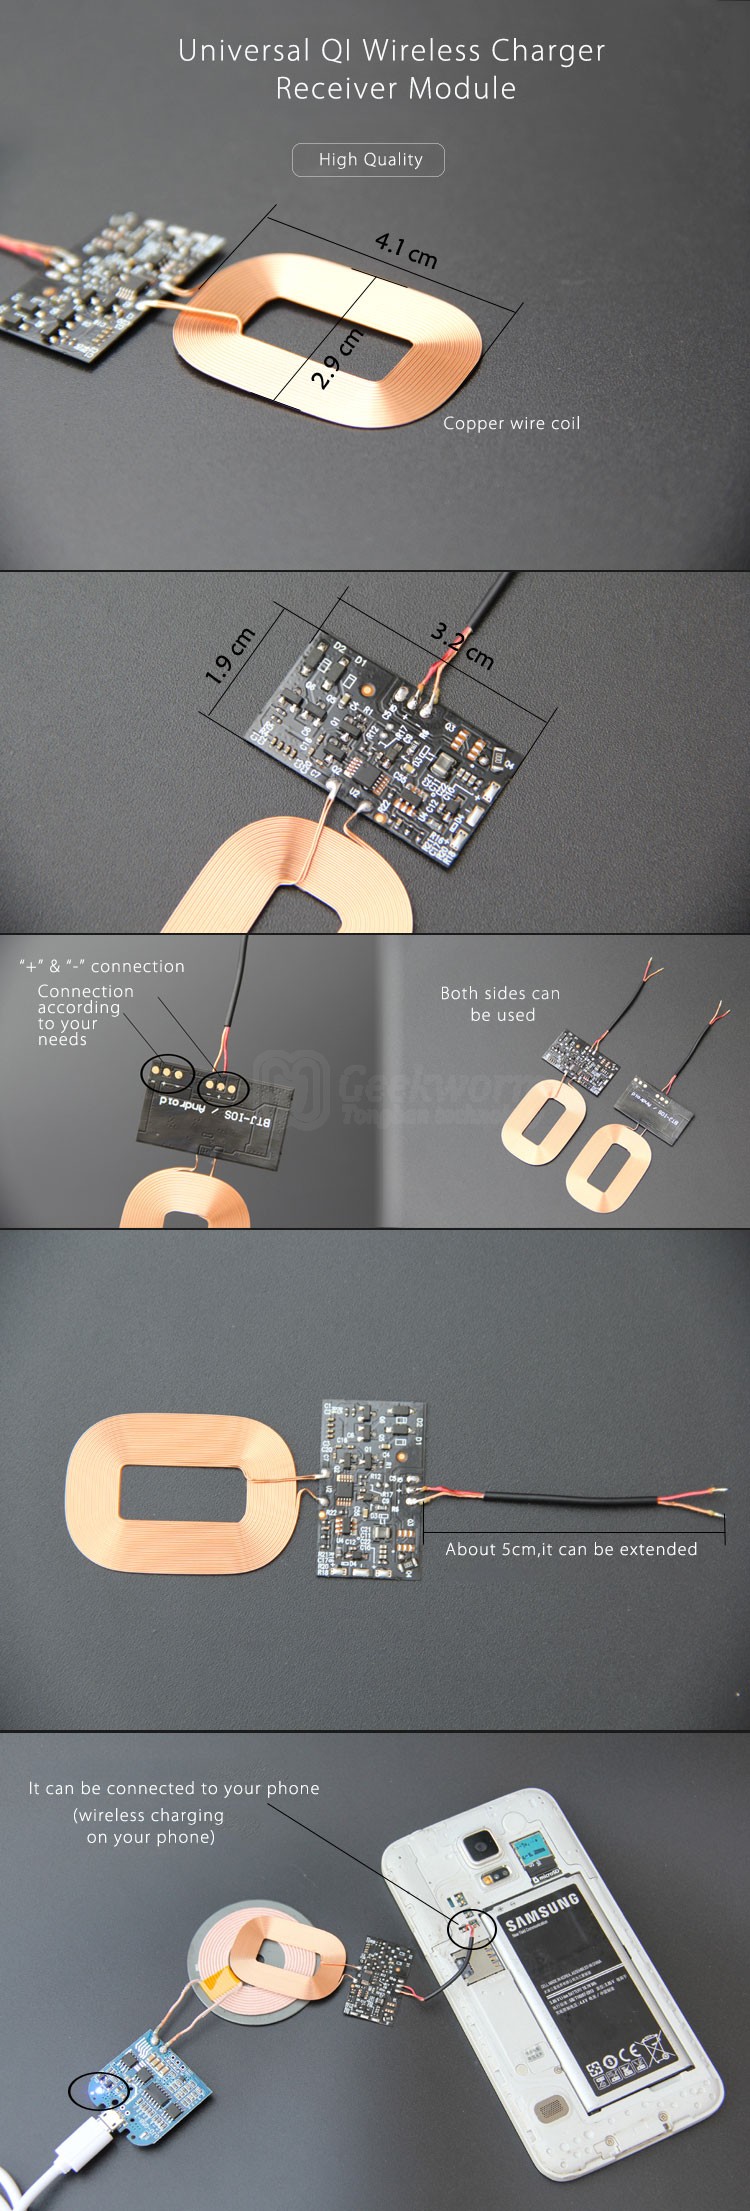 W800-QI-Wireless-Charger-Receiver-Module.jpg